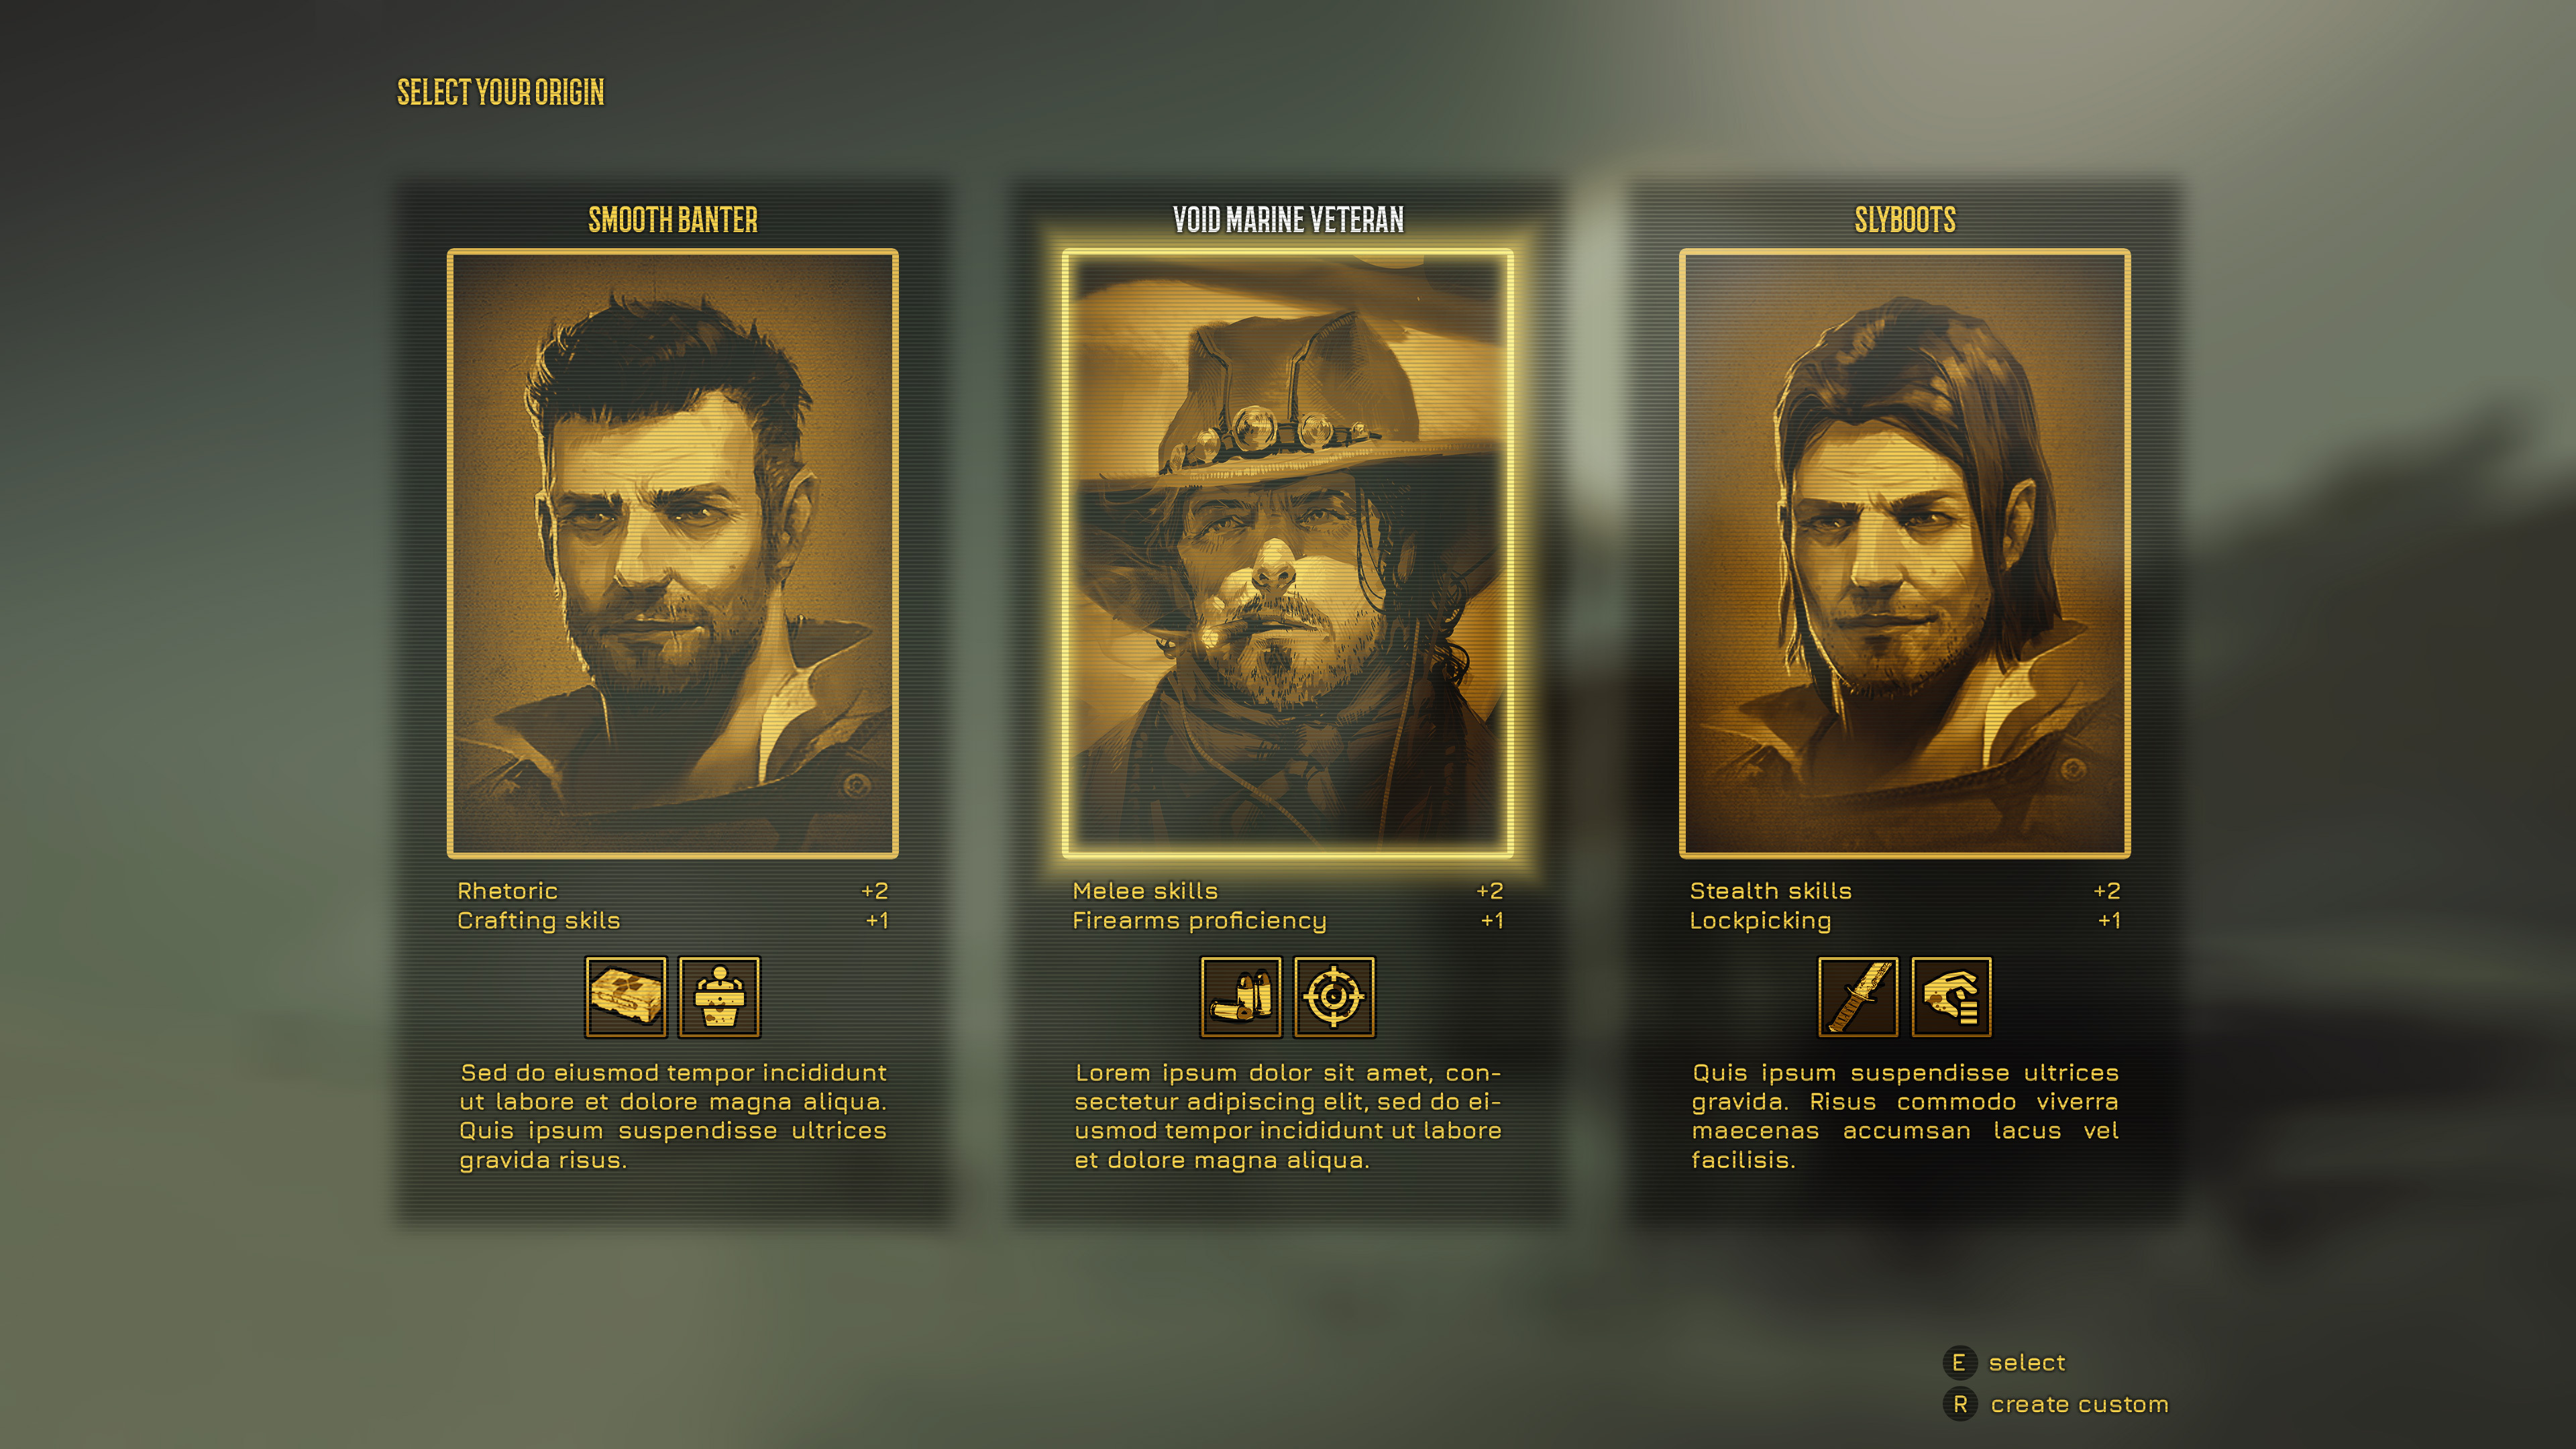 Red Dead Redemption 2 - Plataforma: Steam - Región: Global